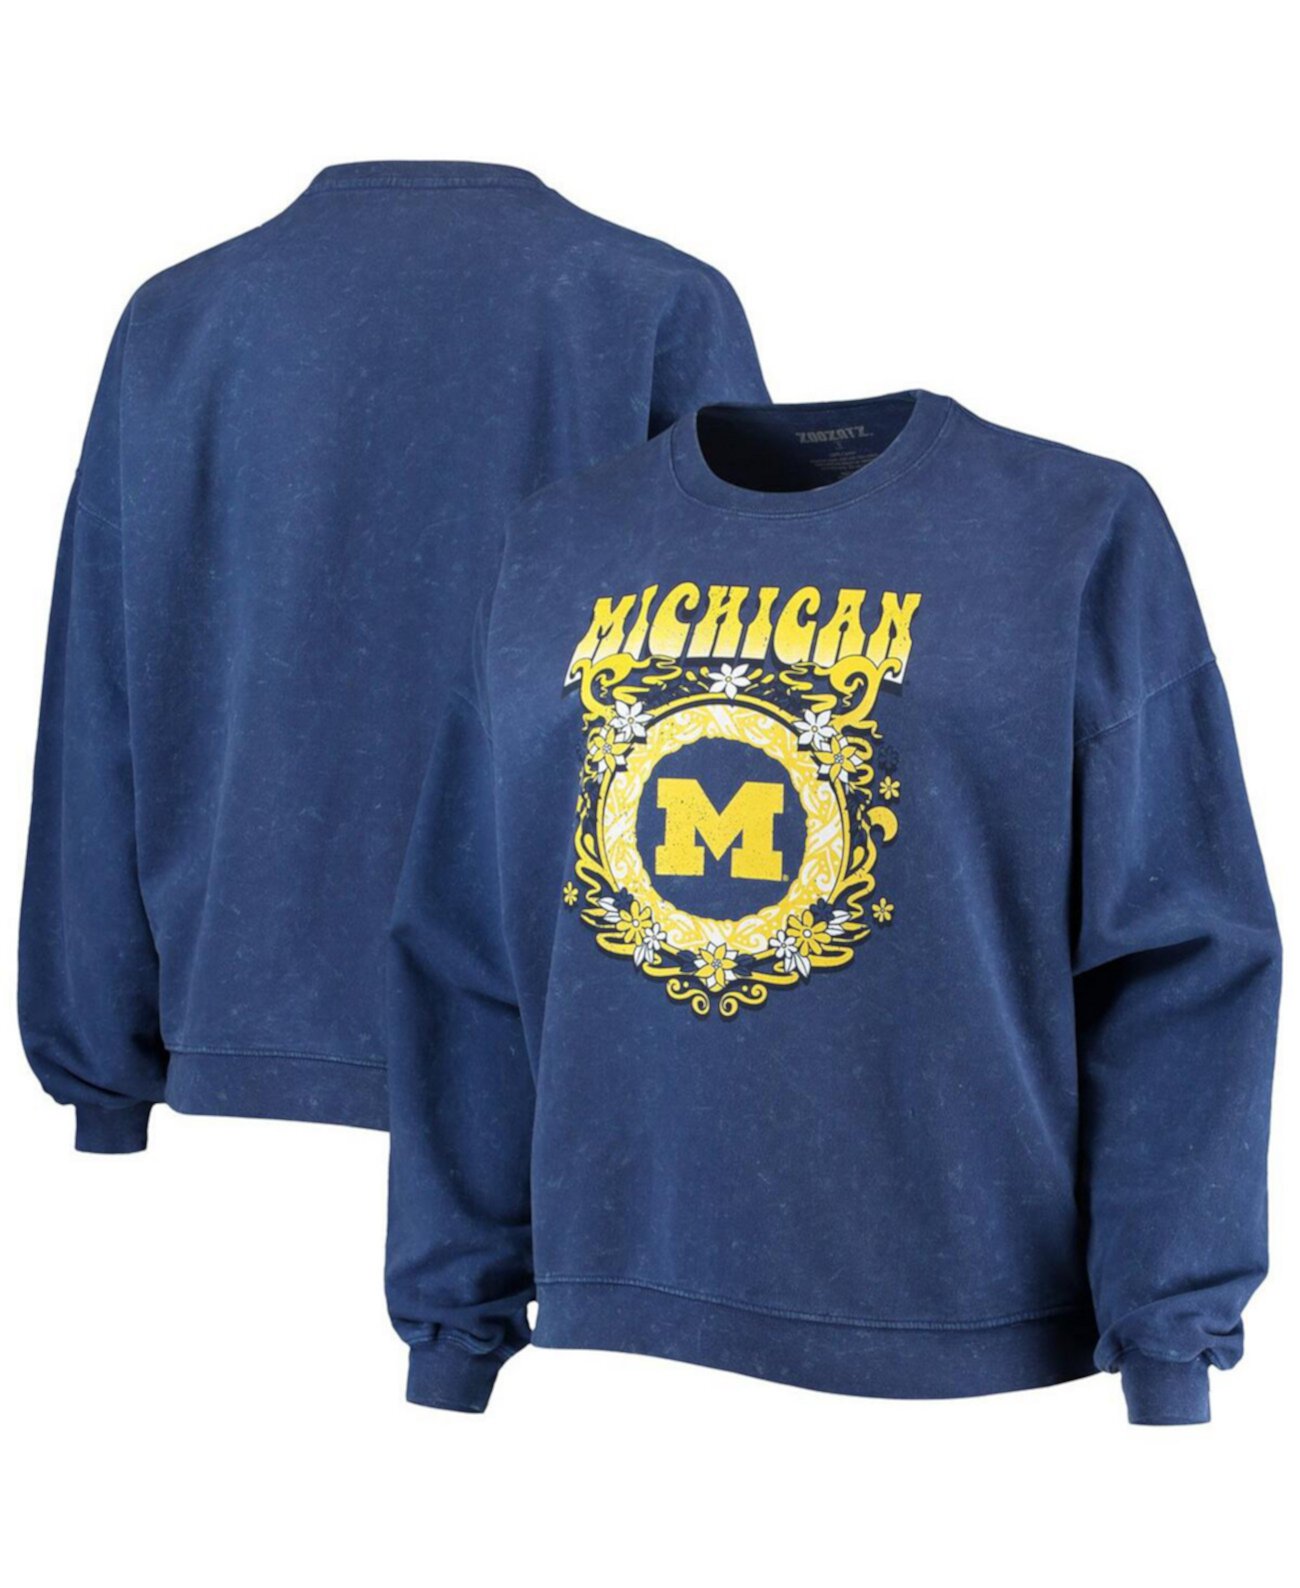 Women's Navy Michigan Wolverines Garment Wash Oversized Vintage-Like Pullover Sweatshirt ZooZatz